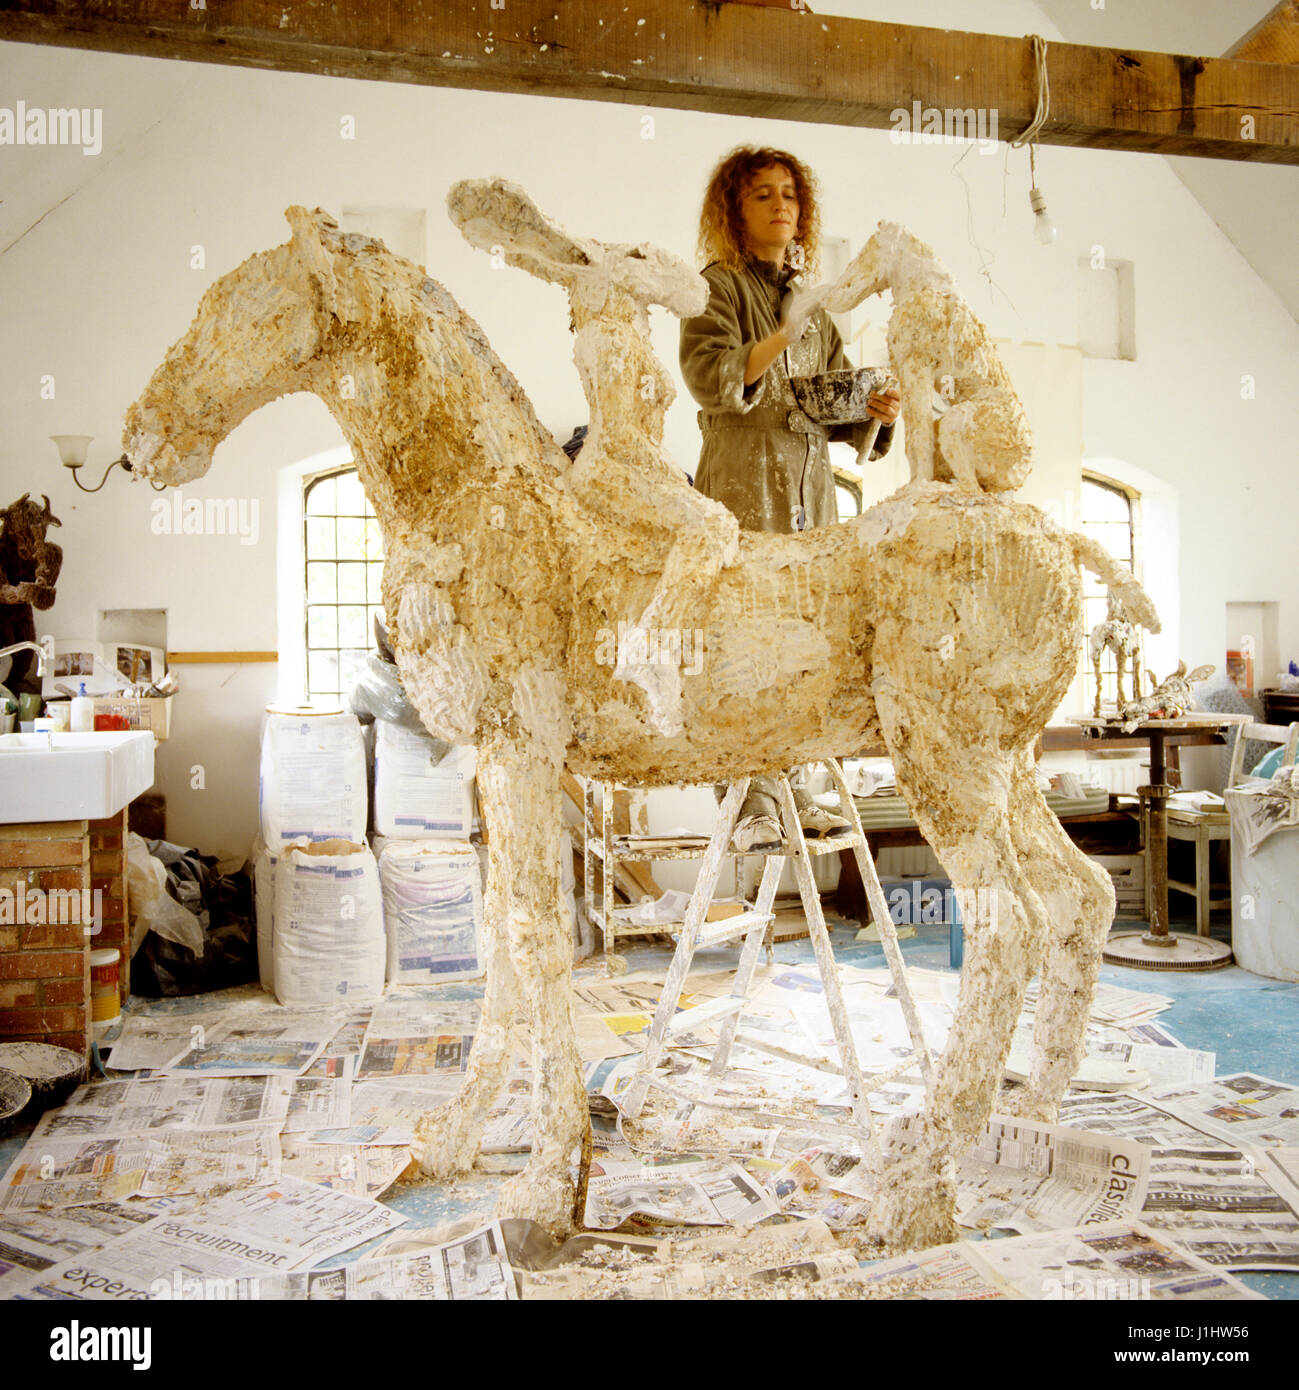 Woman working on sculpture in studio. Stock Photo